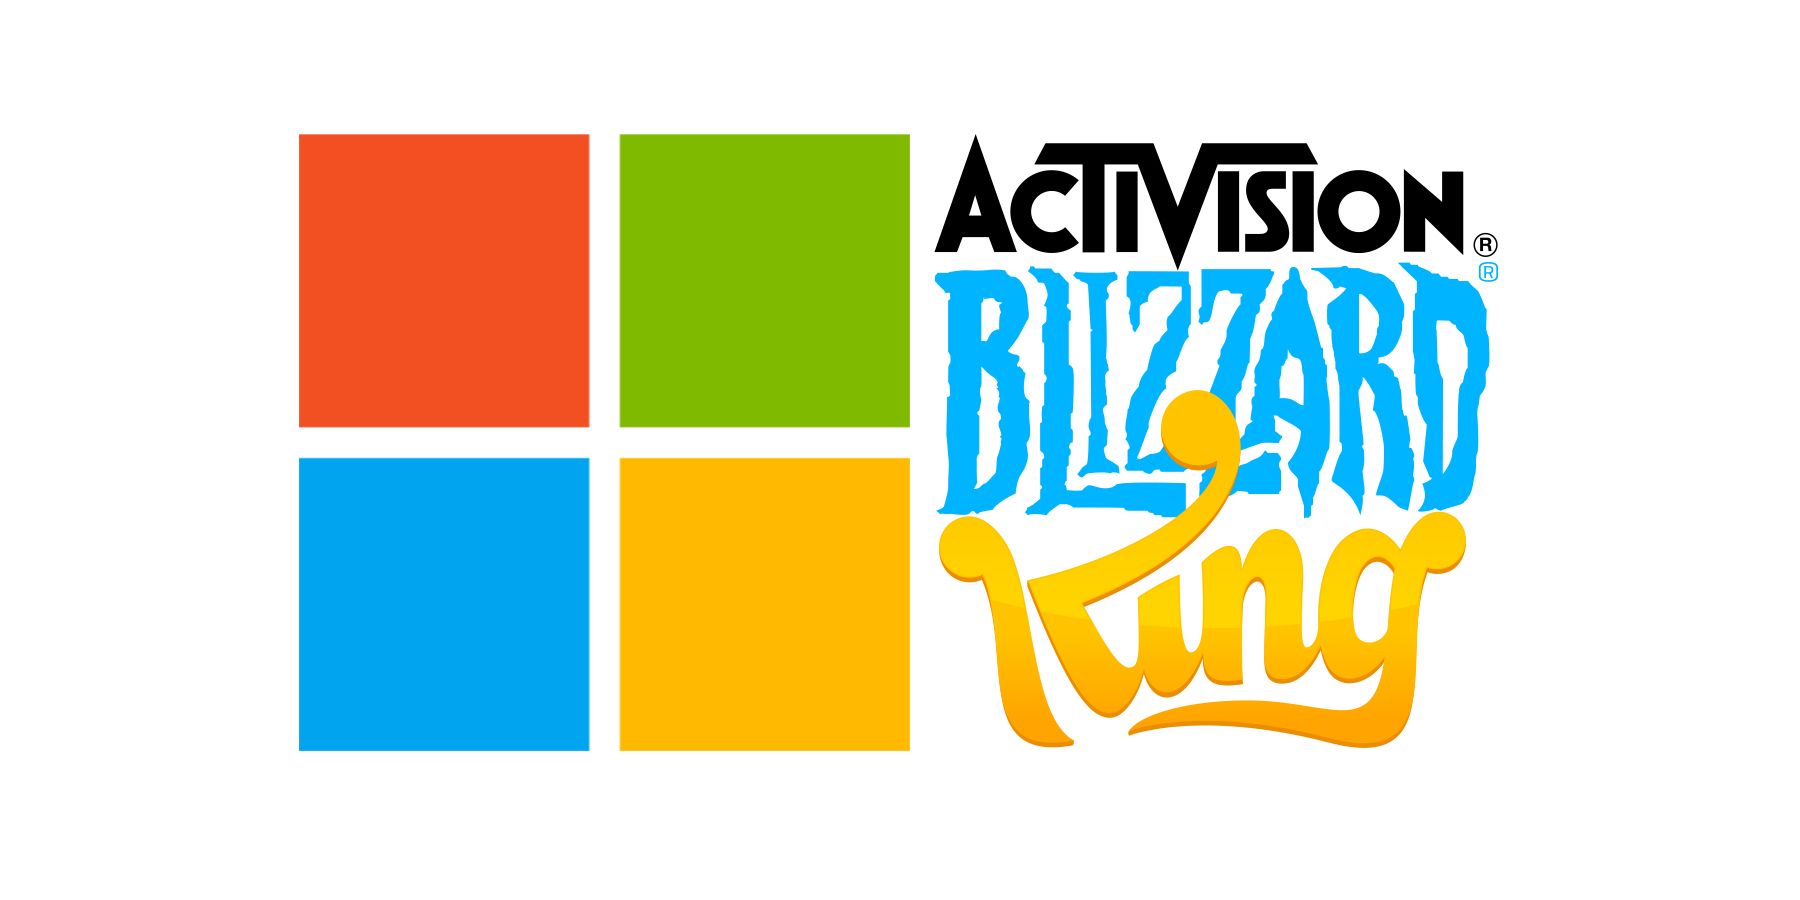 Microsoft Activision Blizzard King logos white background